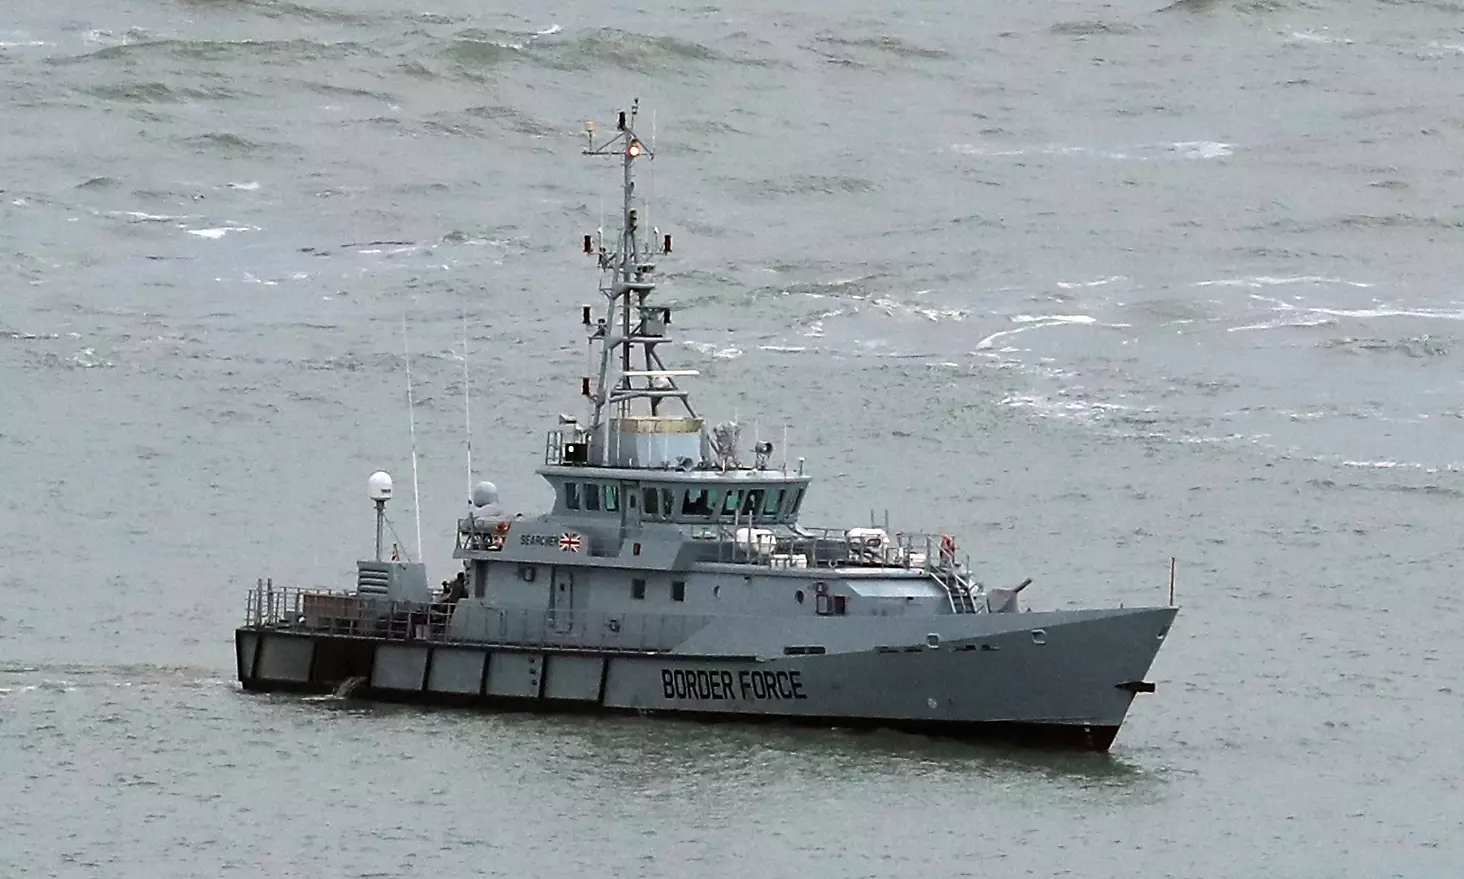 HMC Searcher, one of four cutter ships patrolling UK waters.